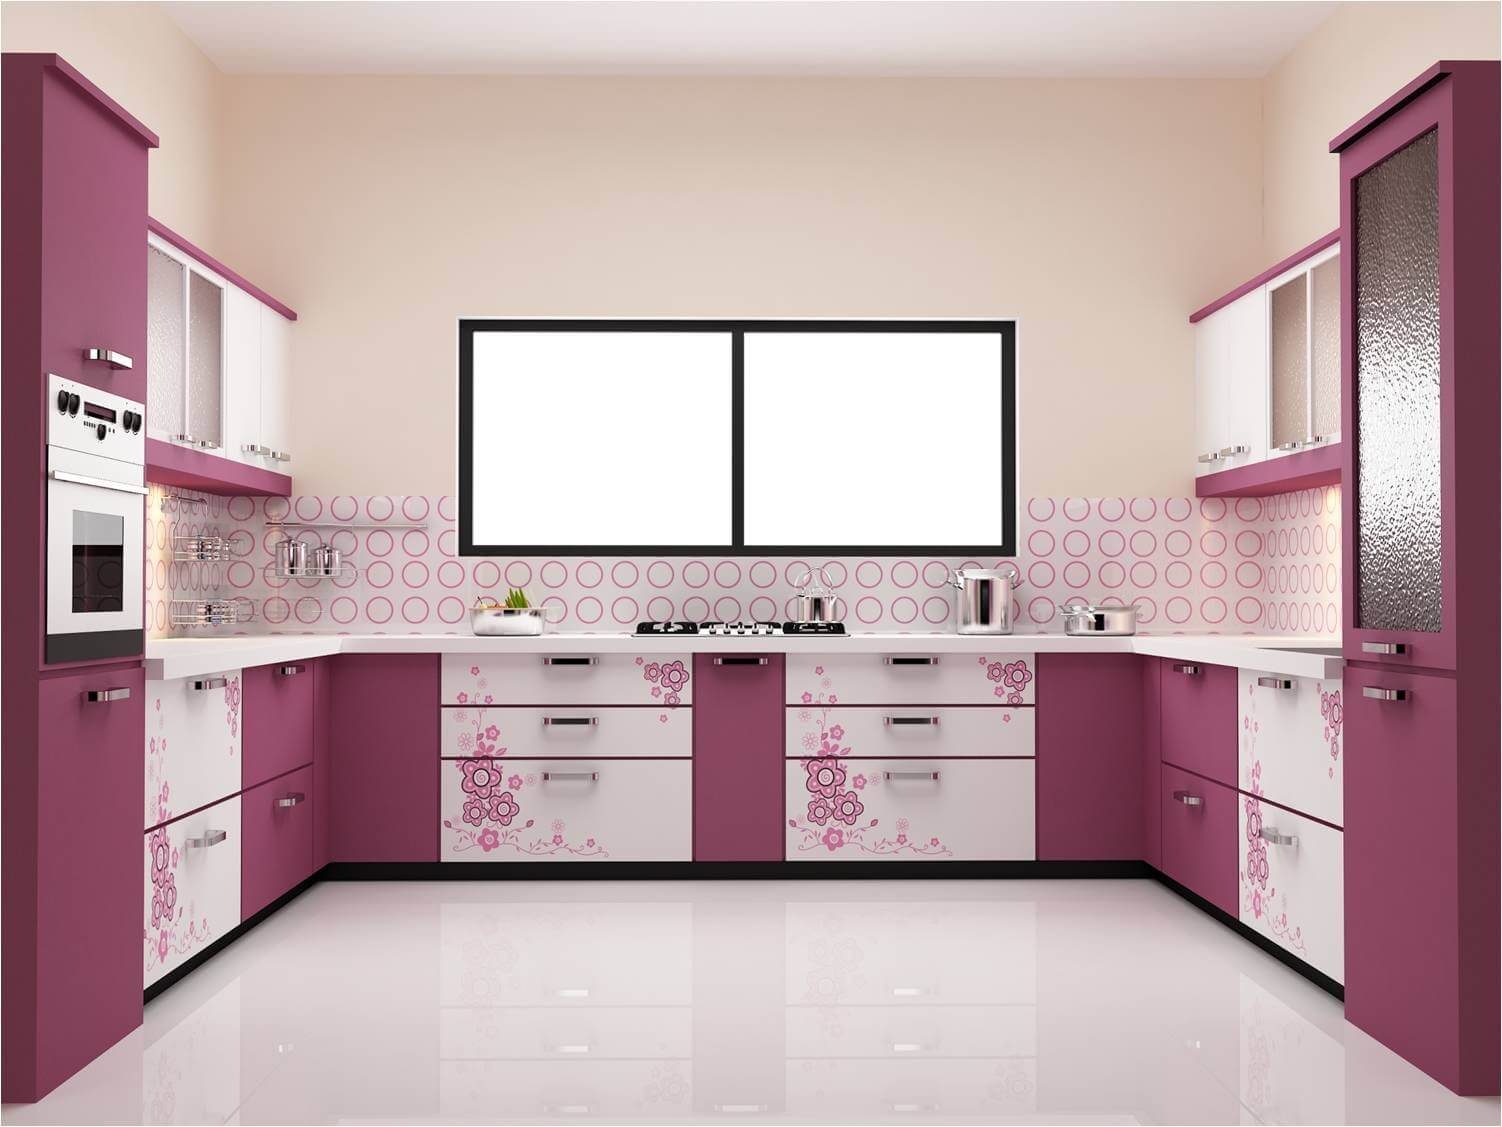 Acralyc kitchen interior